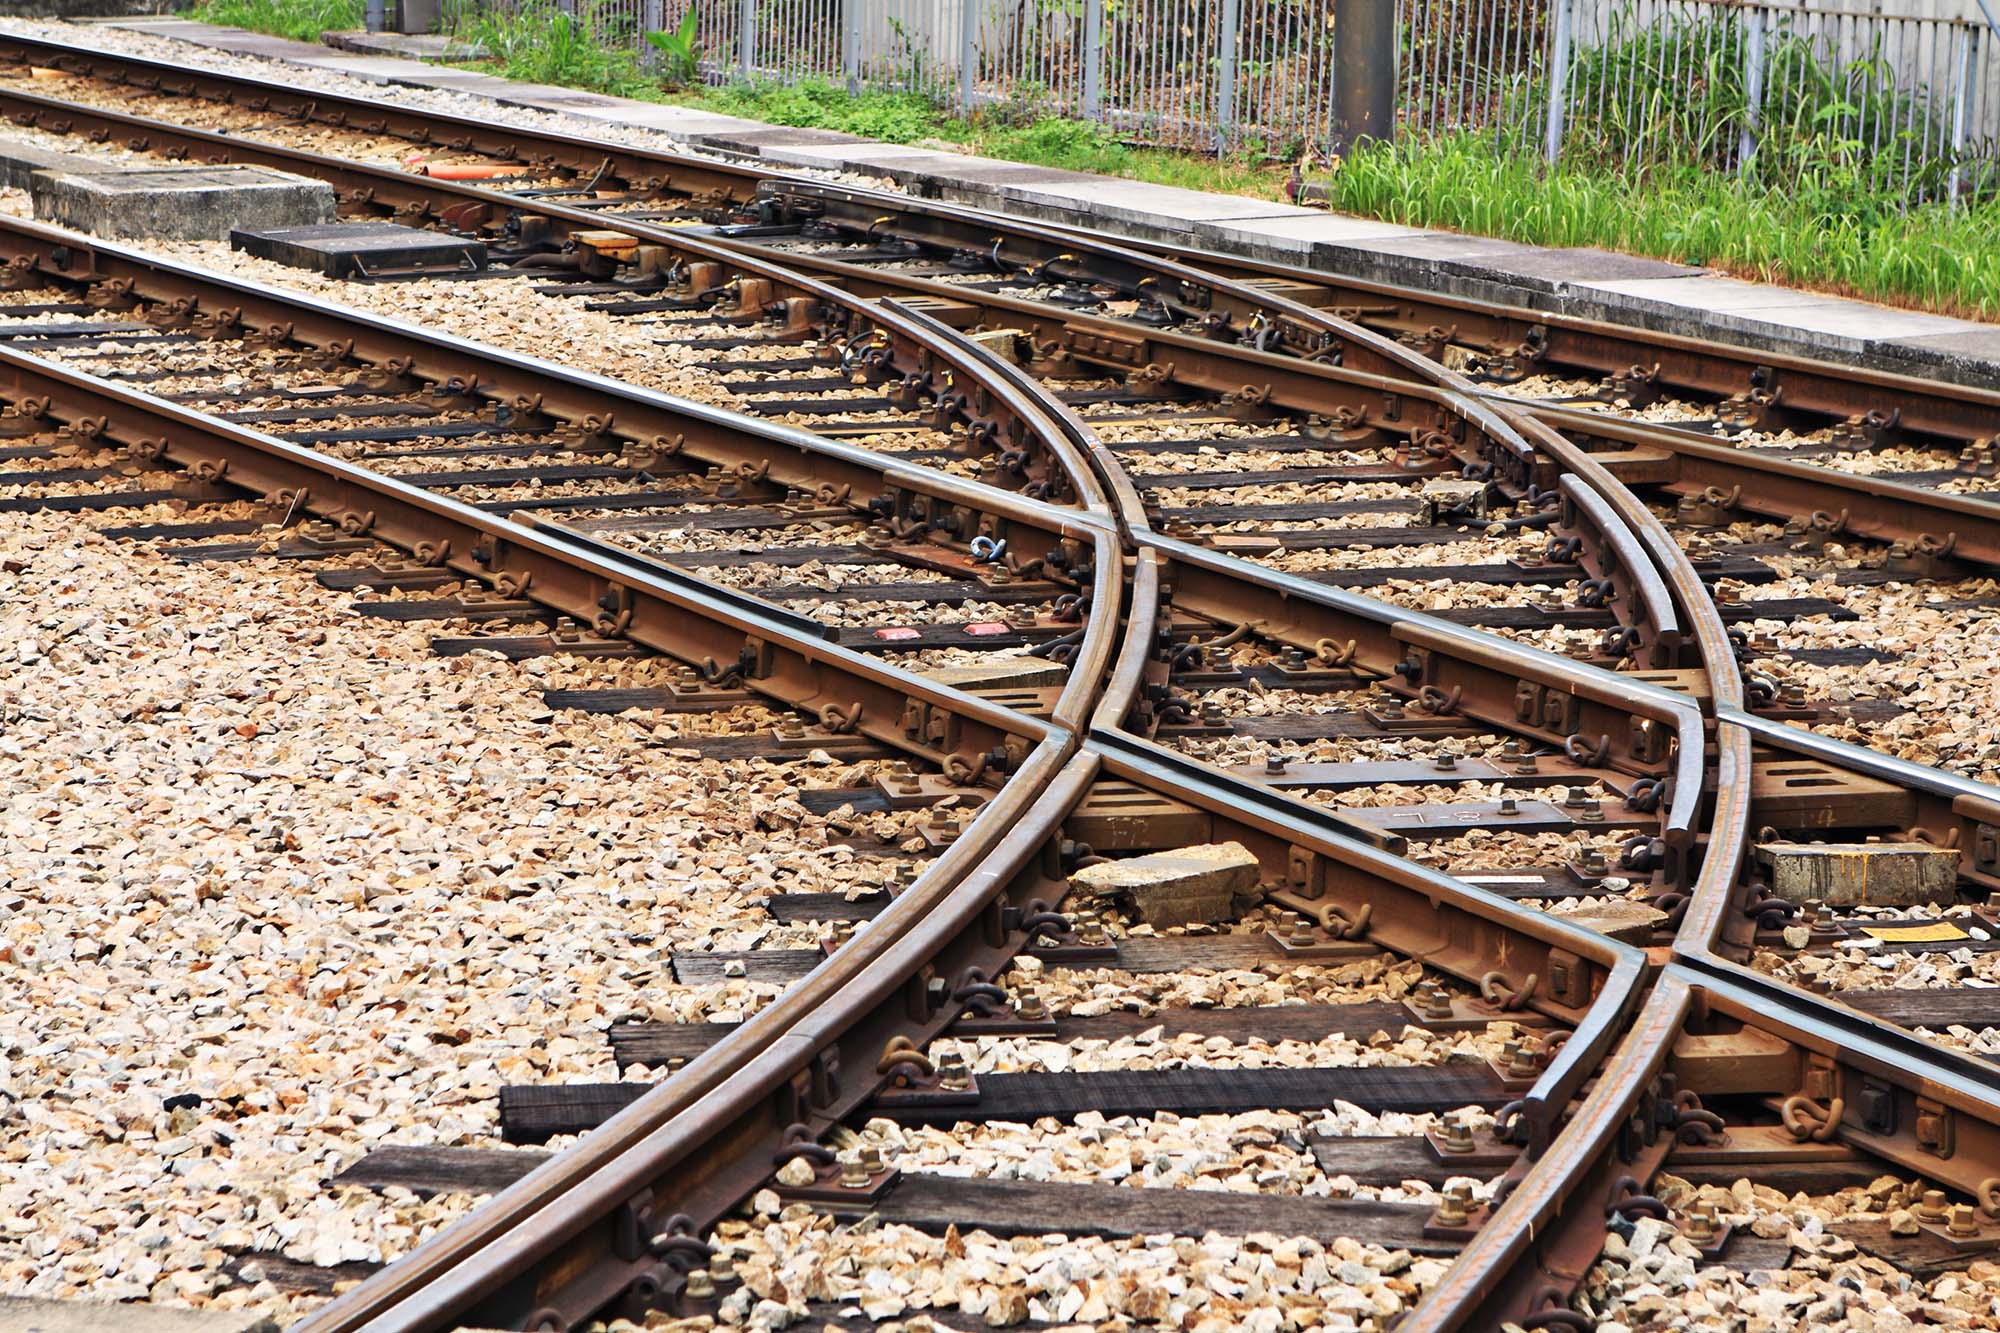 Railroads Announce Service Cuts Ahead of Friday Labor Strike 